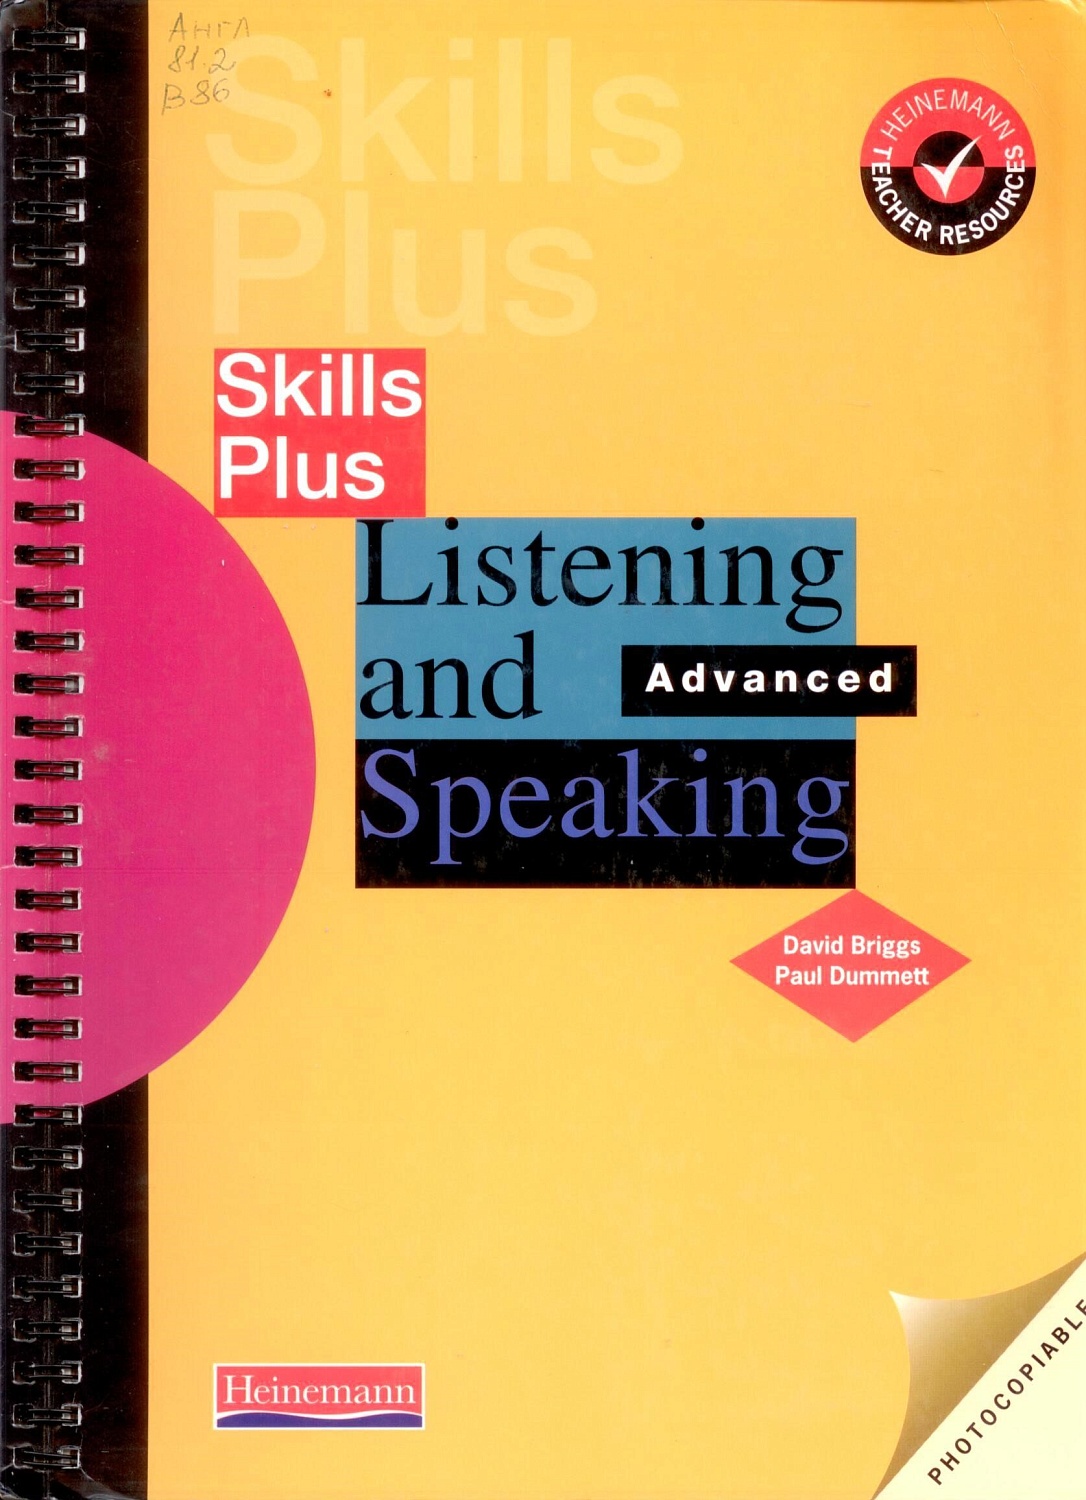 Англ 81.2  B 86 Skills Plus Listening and Speaking: Advanced / D. Briggs, P. Dummett. – Great Britain: Heinemann, 1995. – 100 p.  Пер. загл.: Навыки плюс аудирование и разговорная практика: Продвинутый курс; В прилож: Кассета